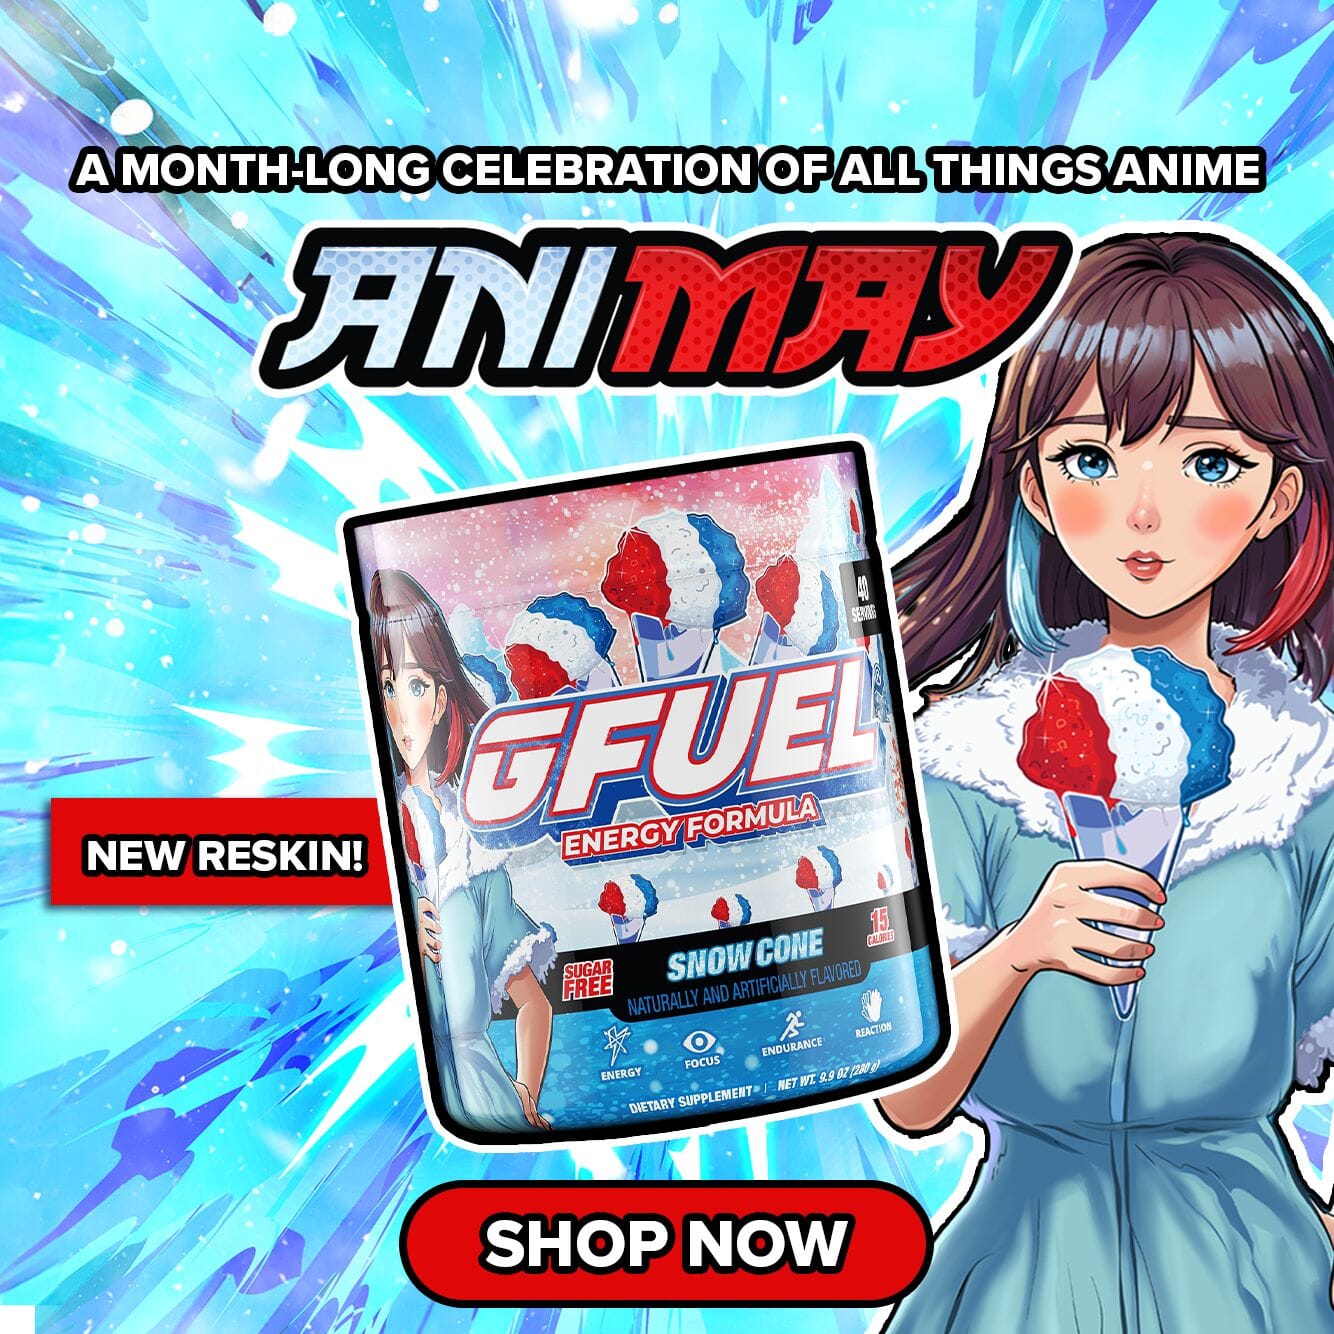 Snow Cone Anime Reskin Powdered Energy Drink G FUEL